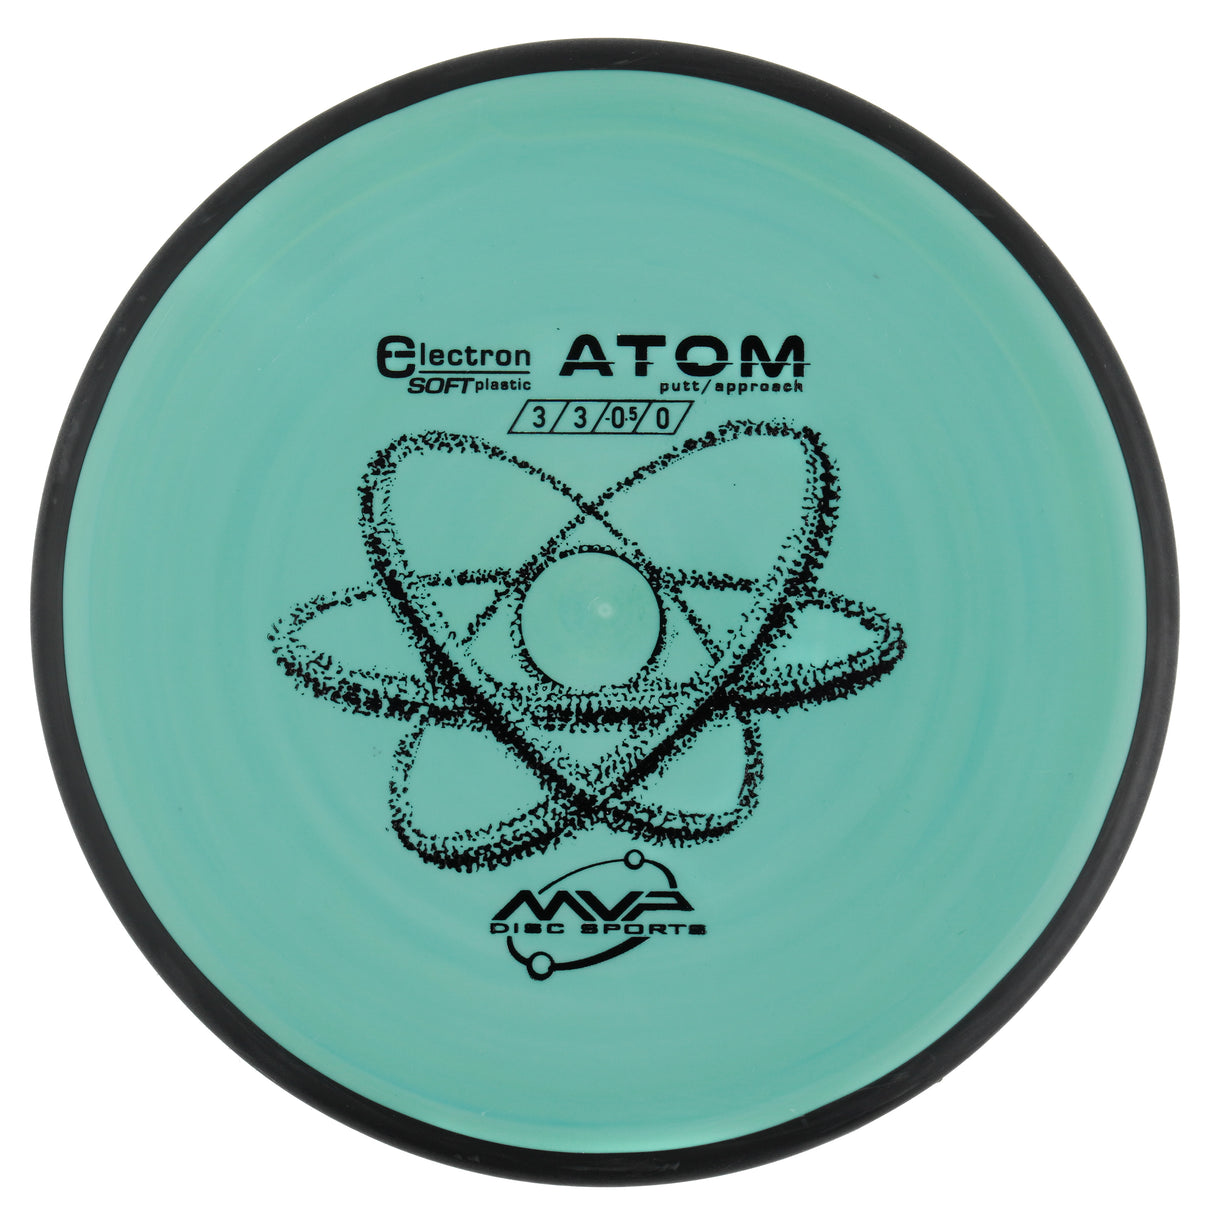 MVP Atom - Electron Soft 175g | Style 0004